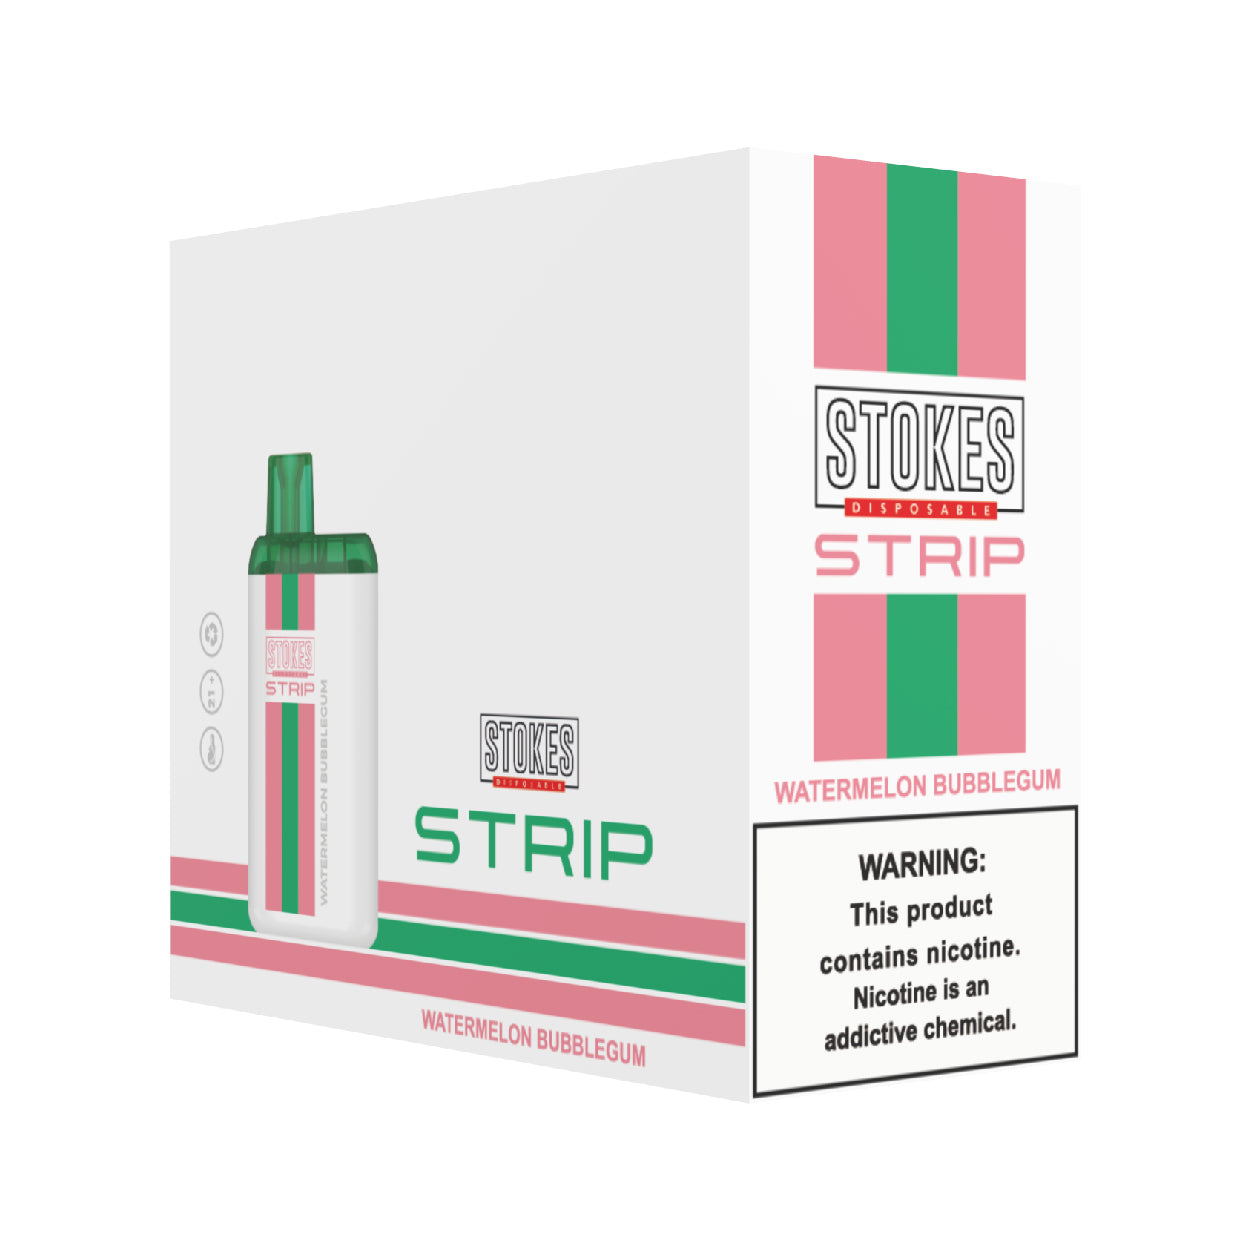 STOKES Strip - 5% Nic. (Disposable Device) - 4000 puffs - Watermelon Bubble Gum